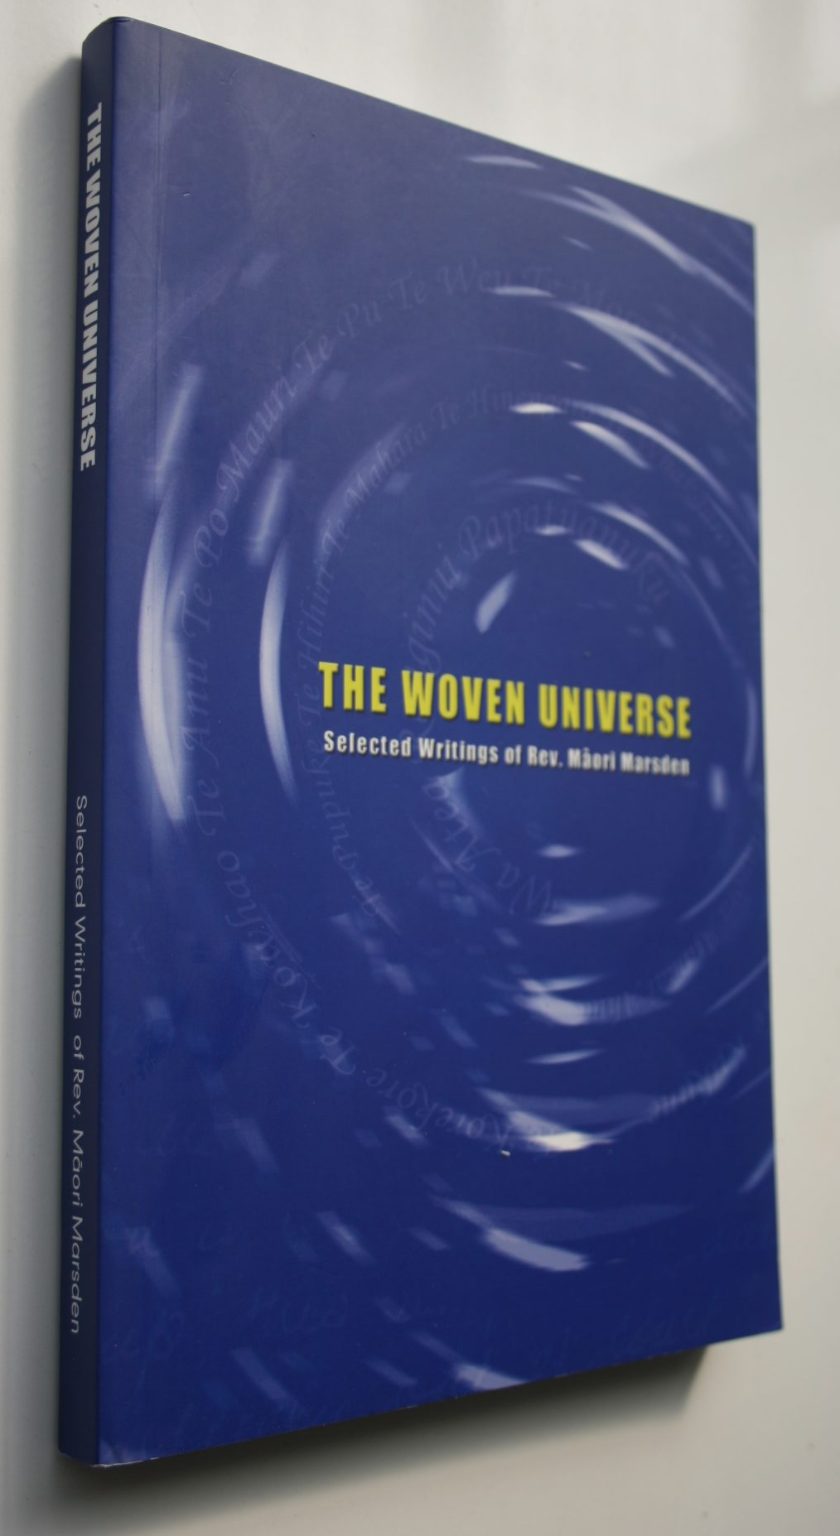 The Woven Universe Selected Writings Of Rev. Maori Marsden.